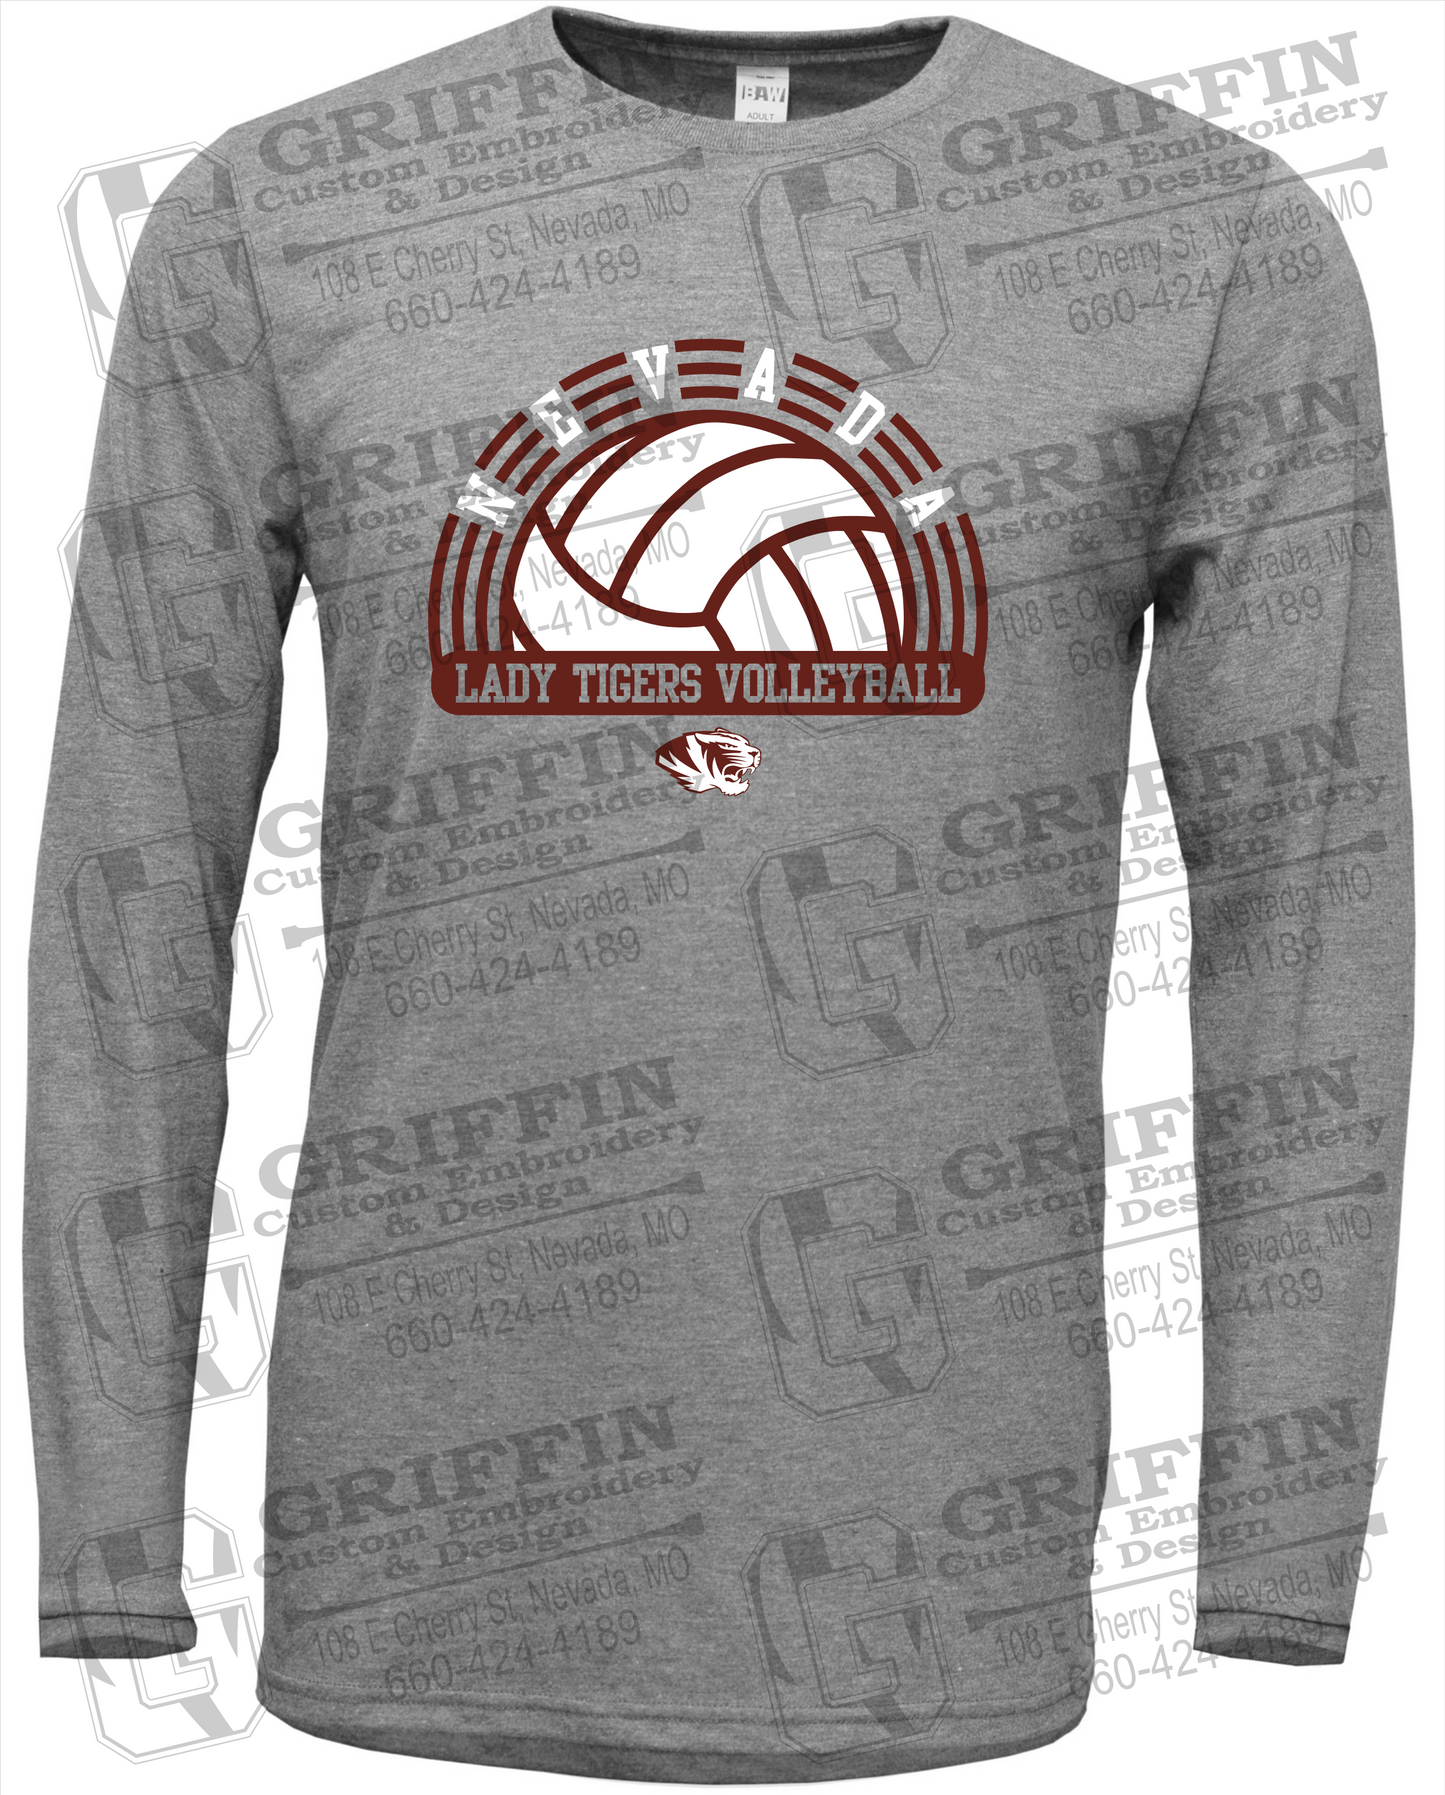 Soft-Tek Long Sleeve T-Shirt - Volleyball - Nevada Tigers 23-R